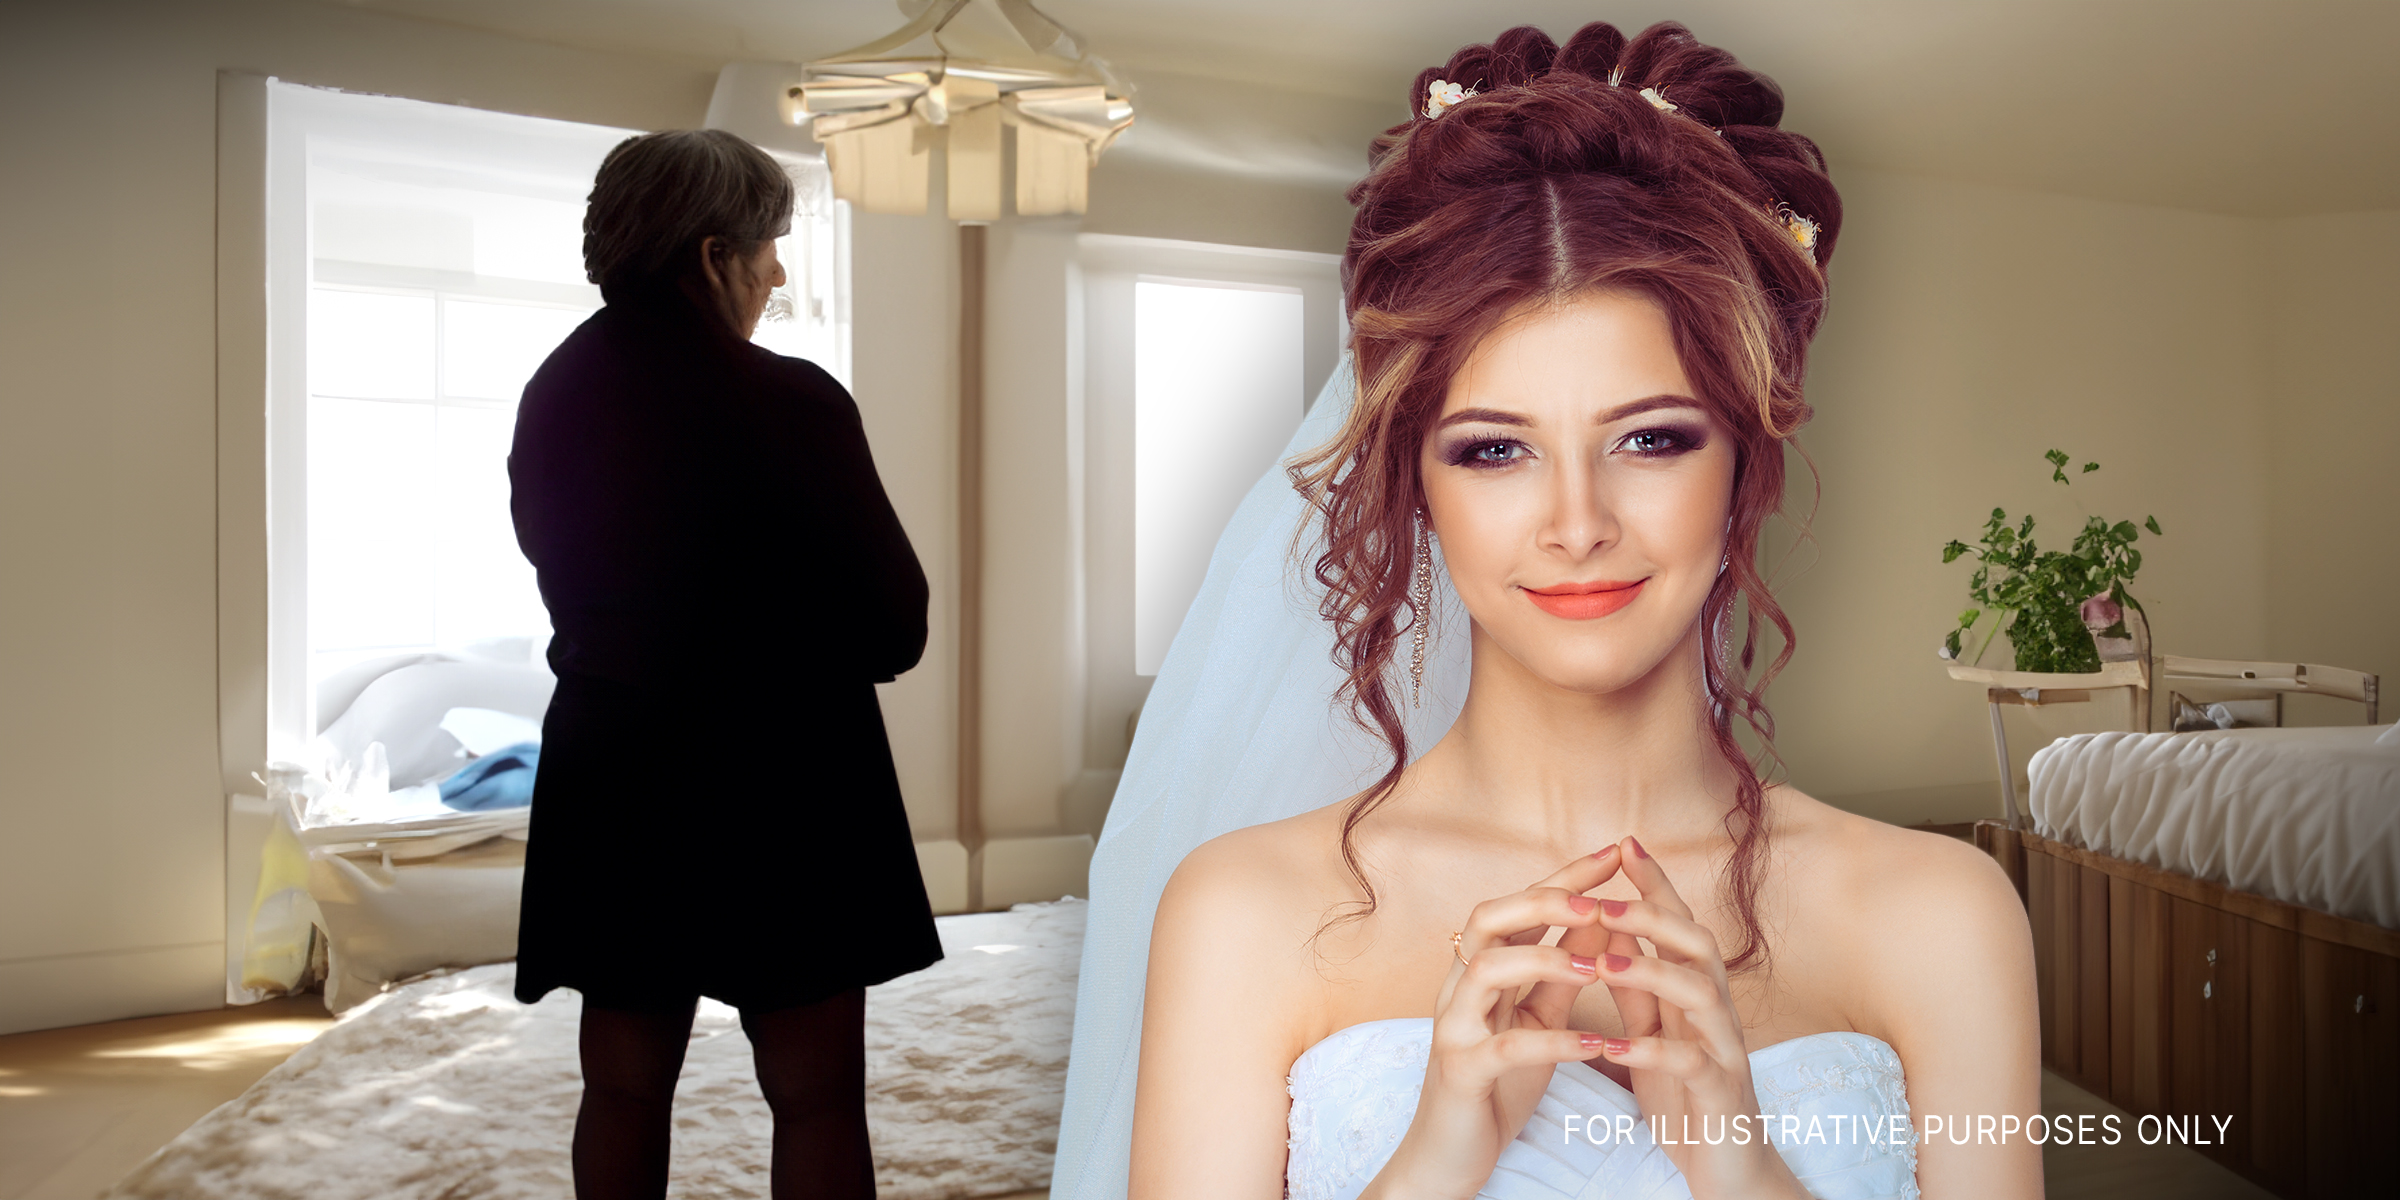 A woman standing behind a bride | Source: Shutterstock